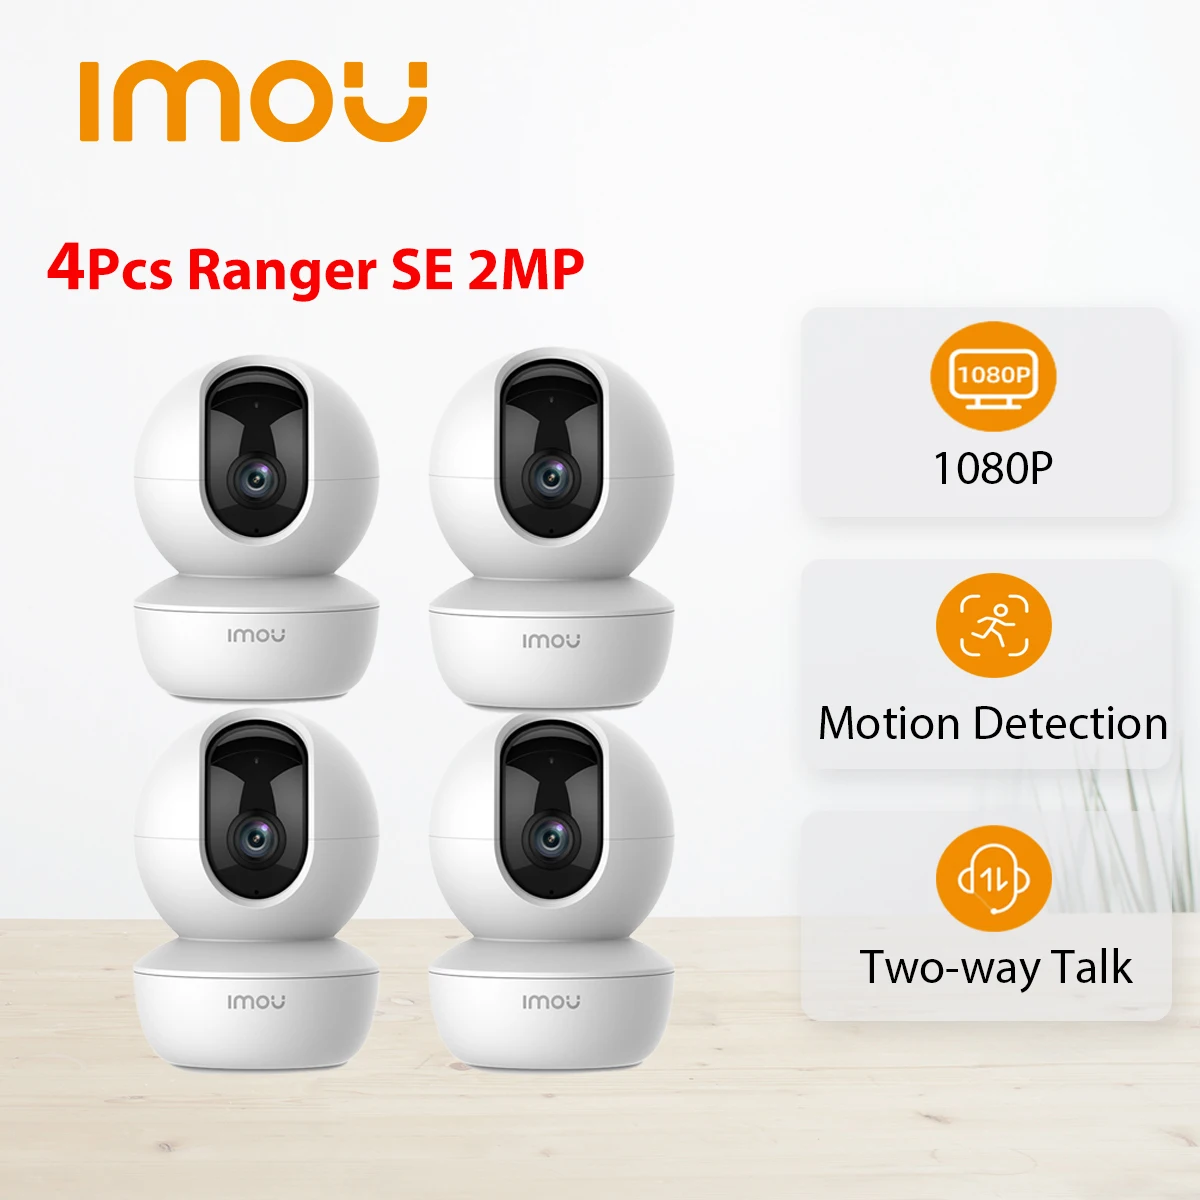 Dahua imou 4Pcs Ranger SE 2MP Baby Monitoring Security AI Body Detection Wireless IP CCTV Indoor 4X Digital Zoom 1080P Camera